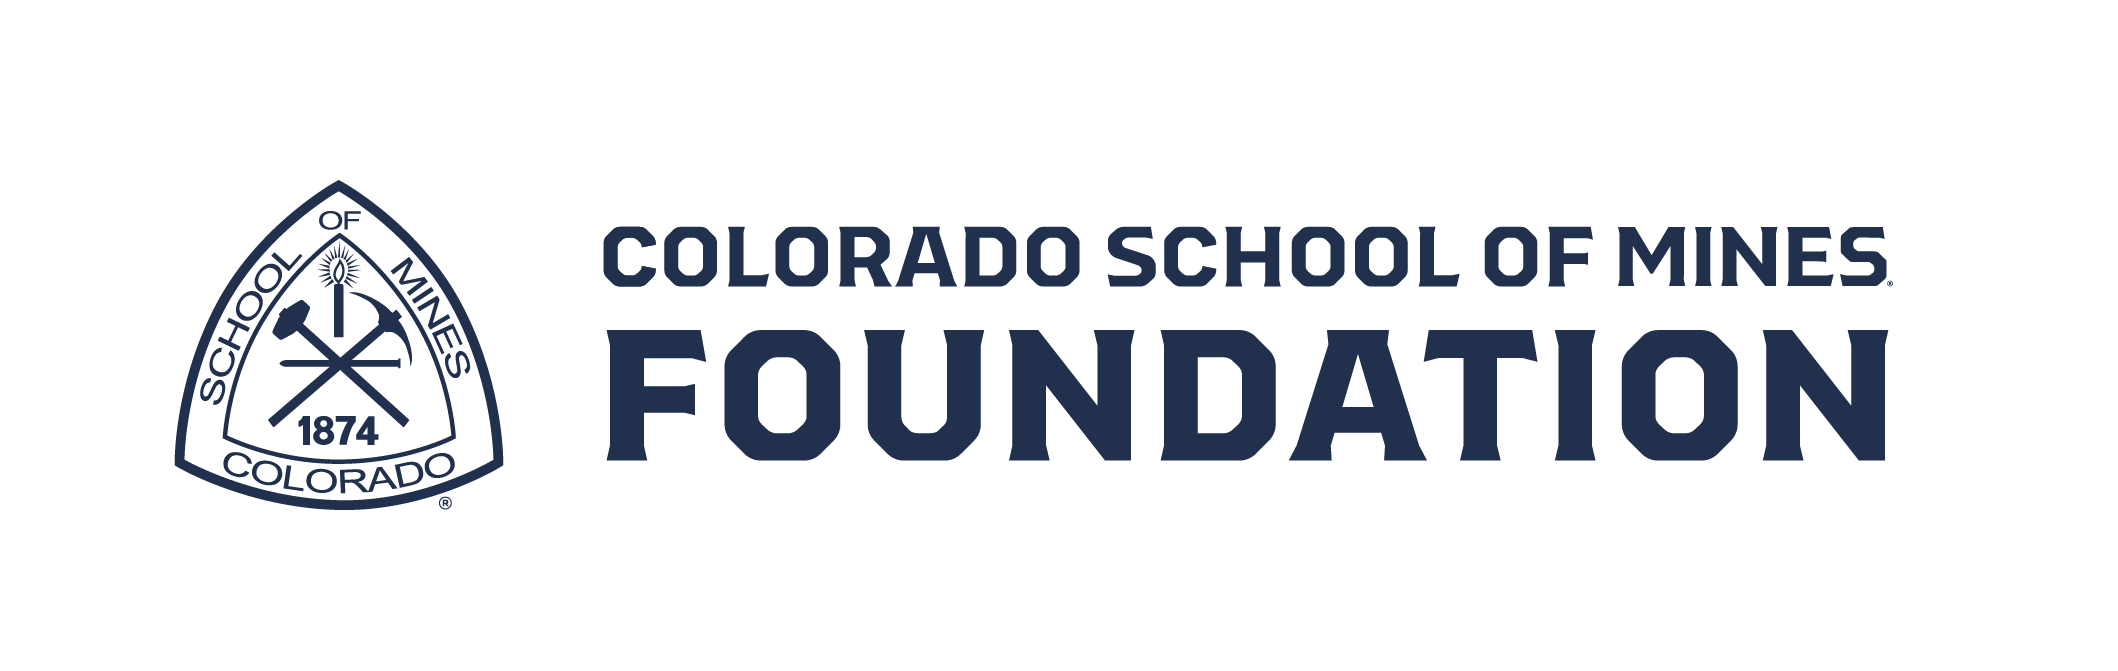 Colorado School of Mines Alumni and Foundation Home